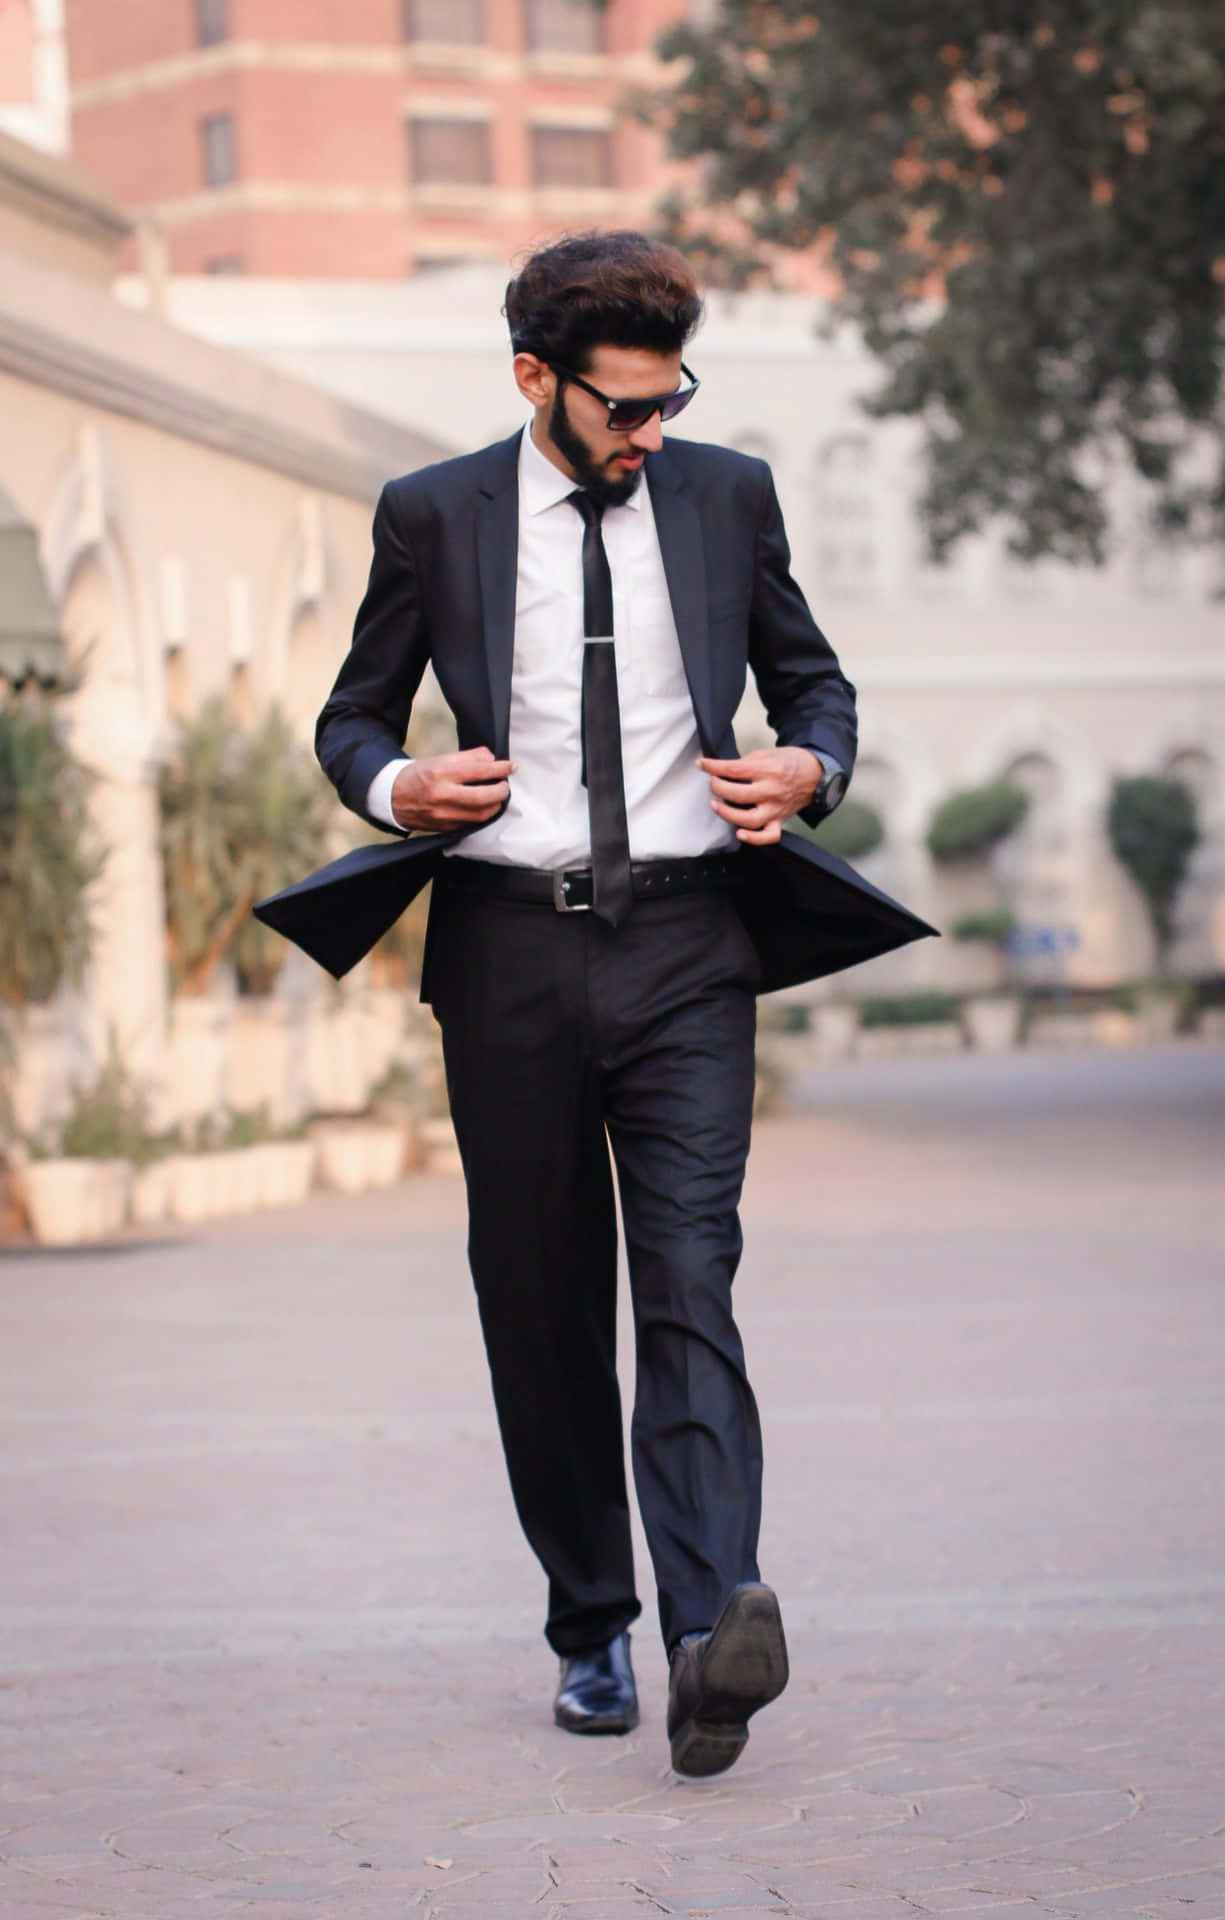 A Man In A Suit Walking Down A Street